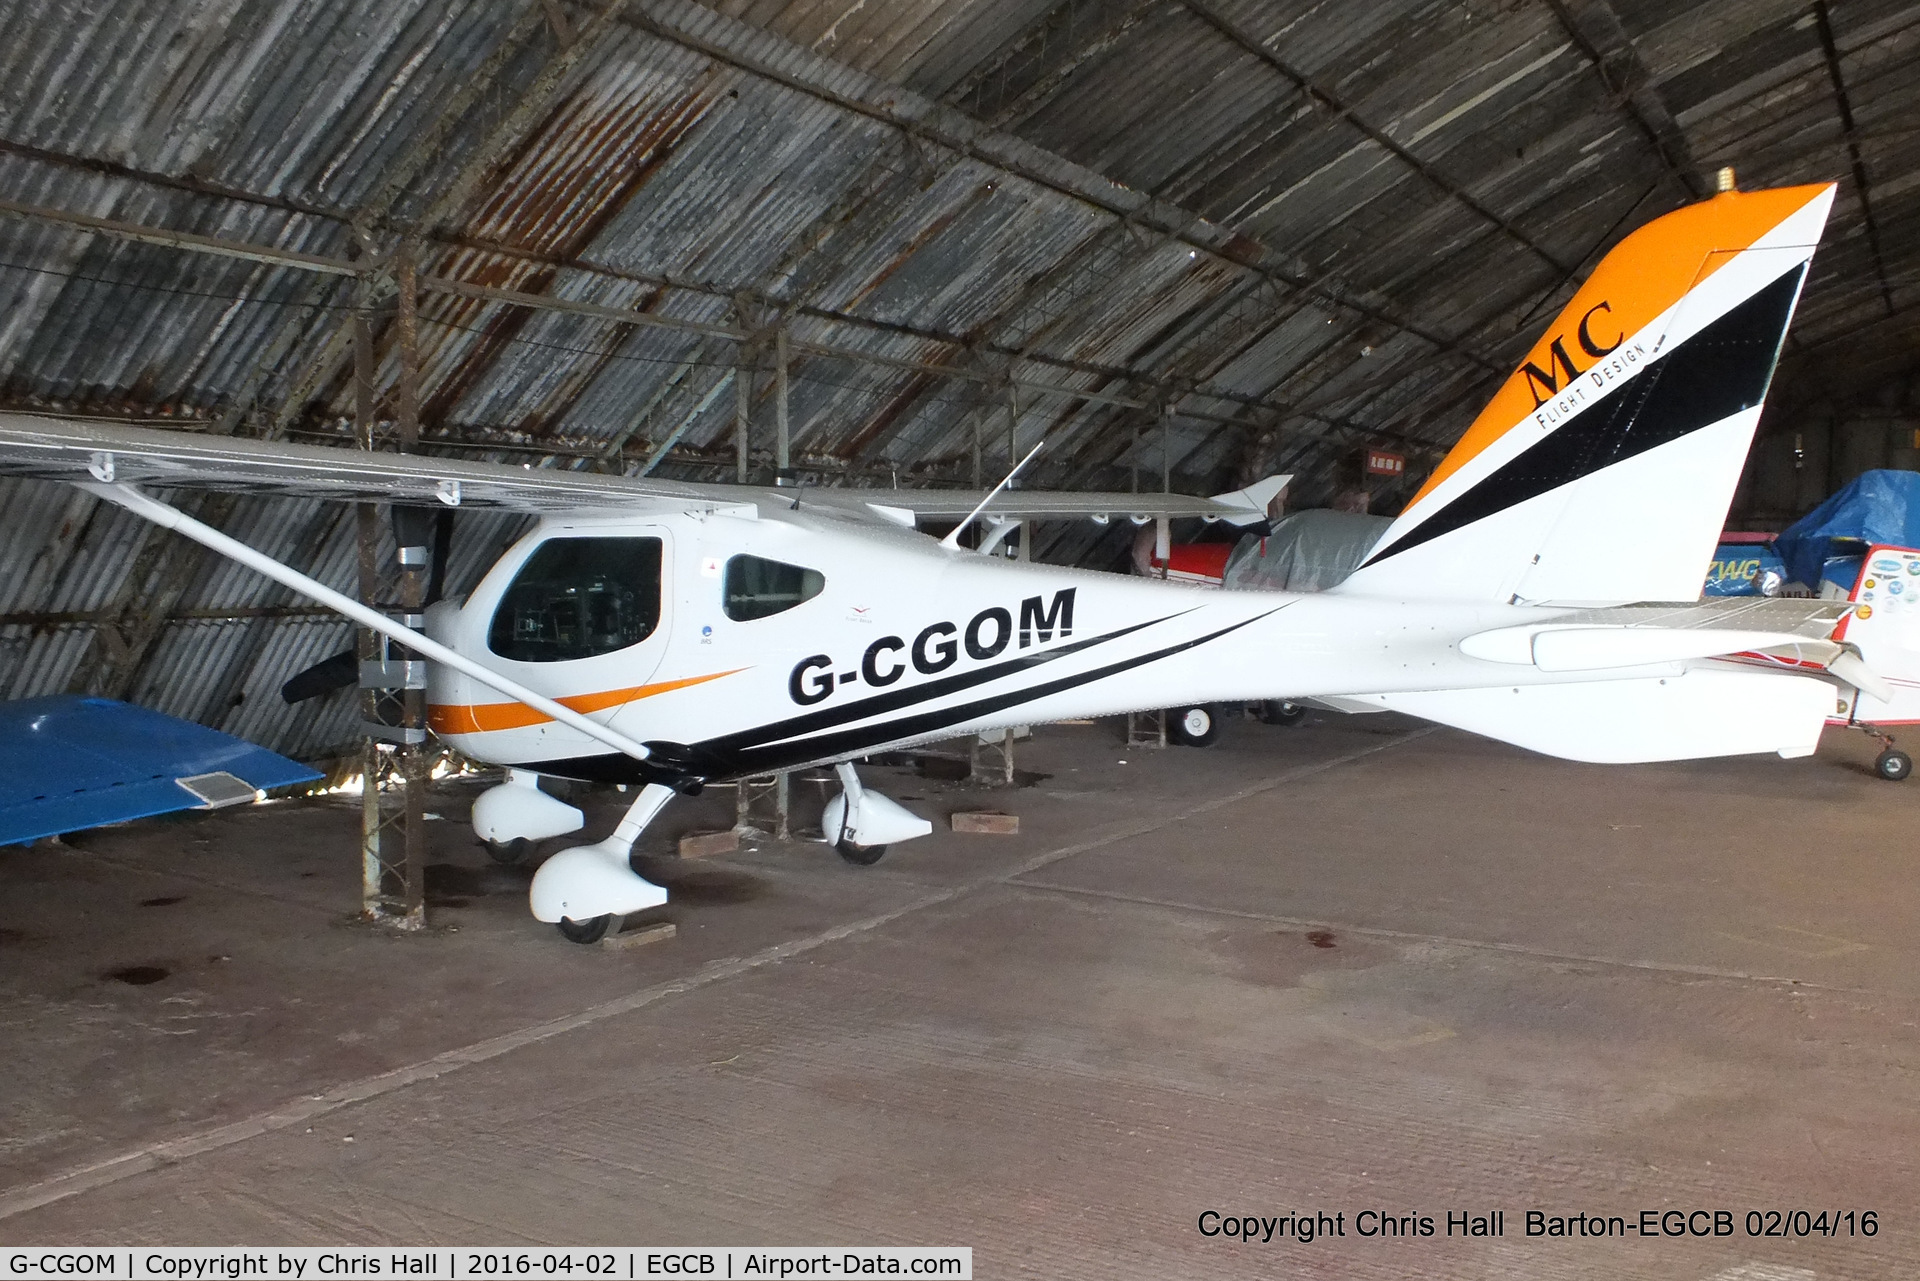 G-CGOM, 2010 Flight Design MC C/N A-10-04-31, Barton resident